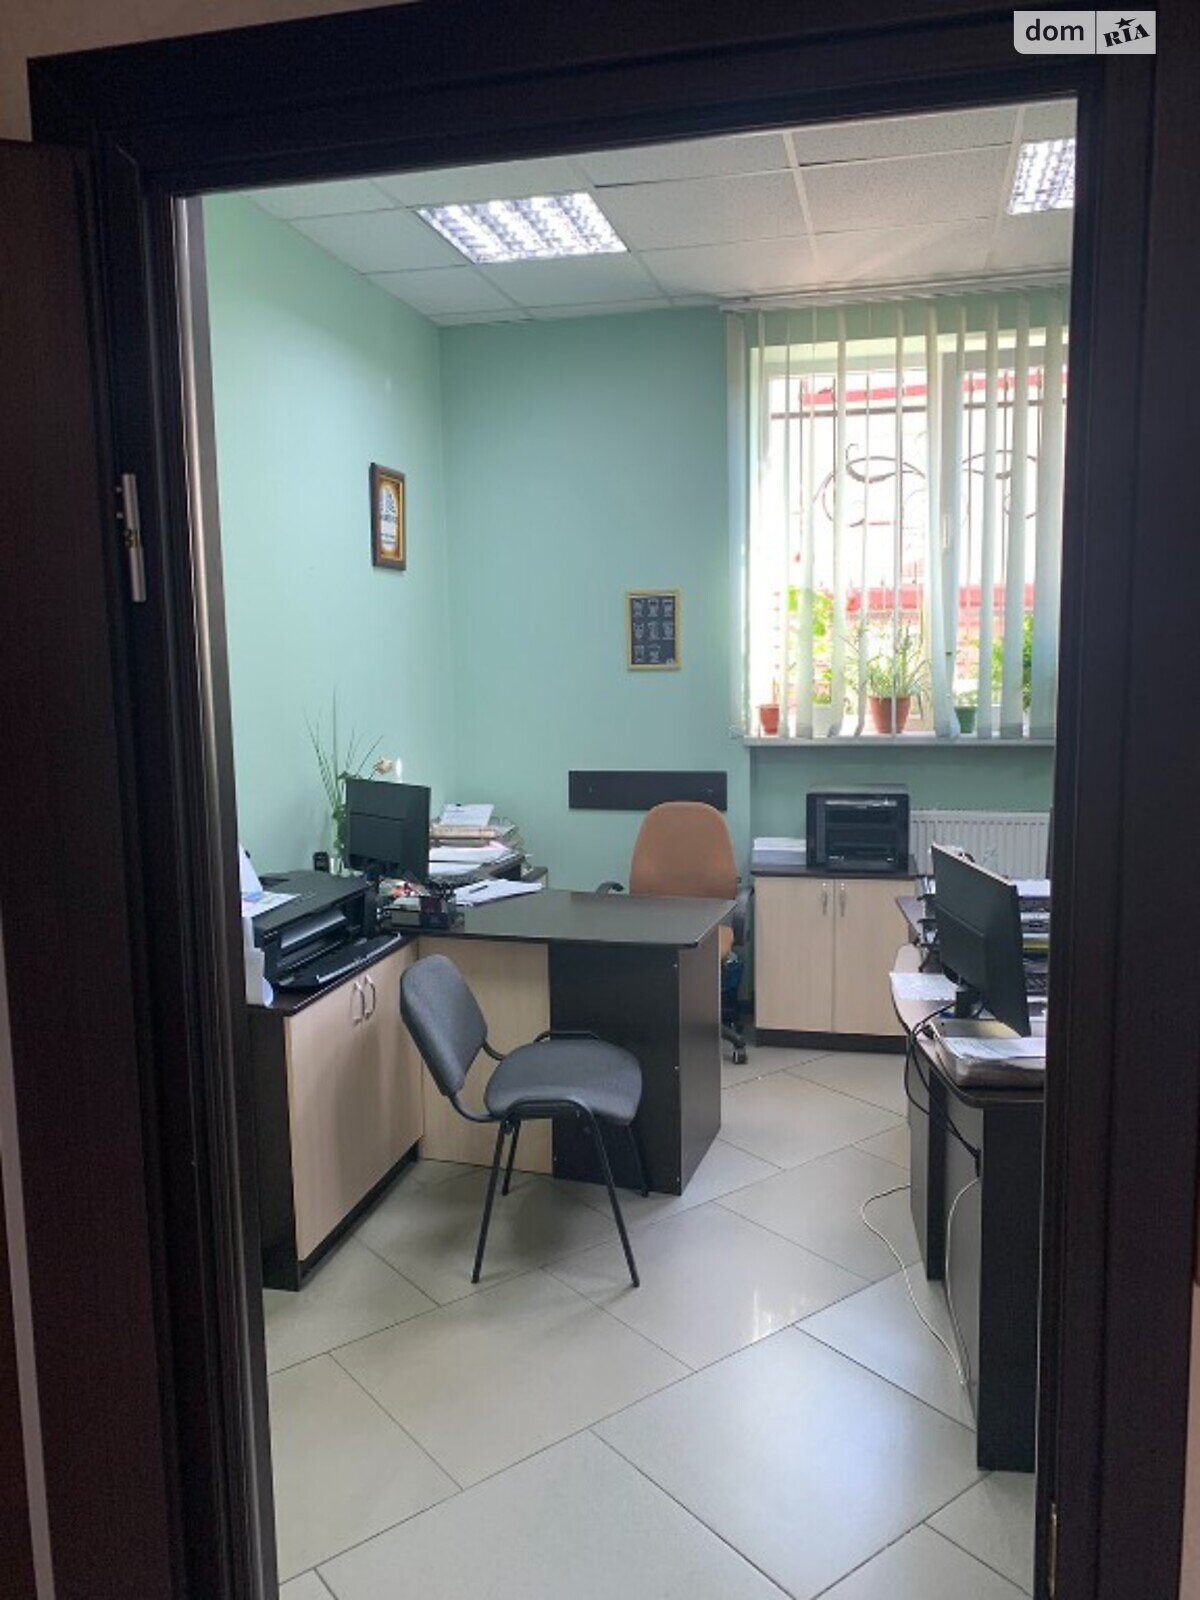 Офисное помещение на 190 кв.м. в Ивано-Франковске фото 1